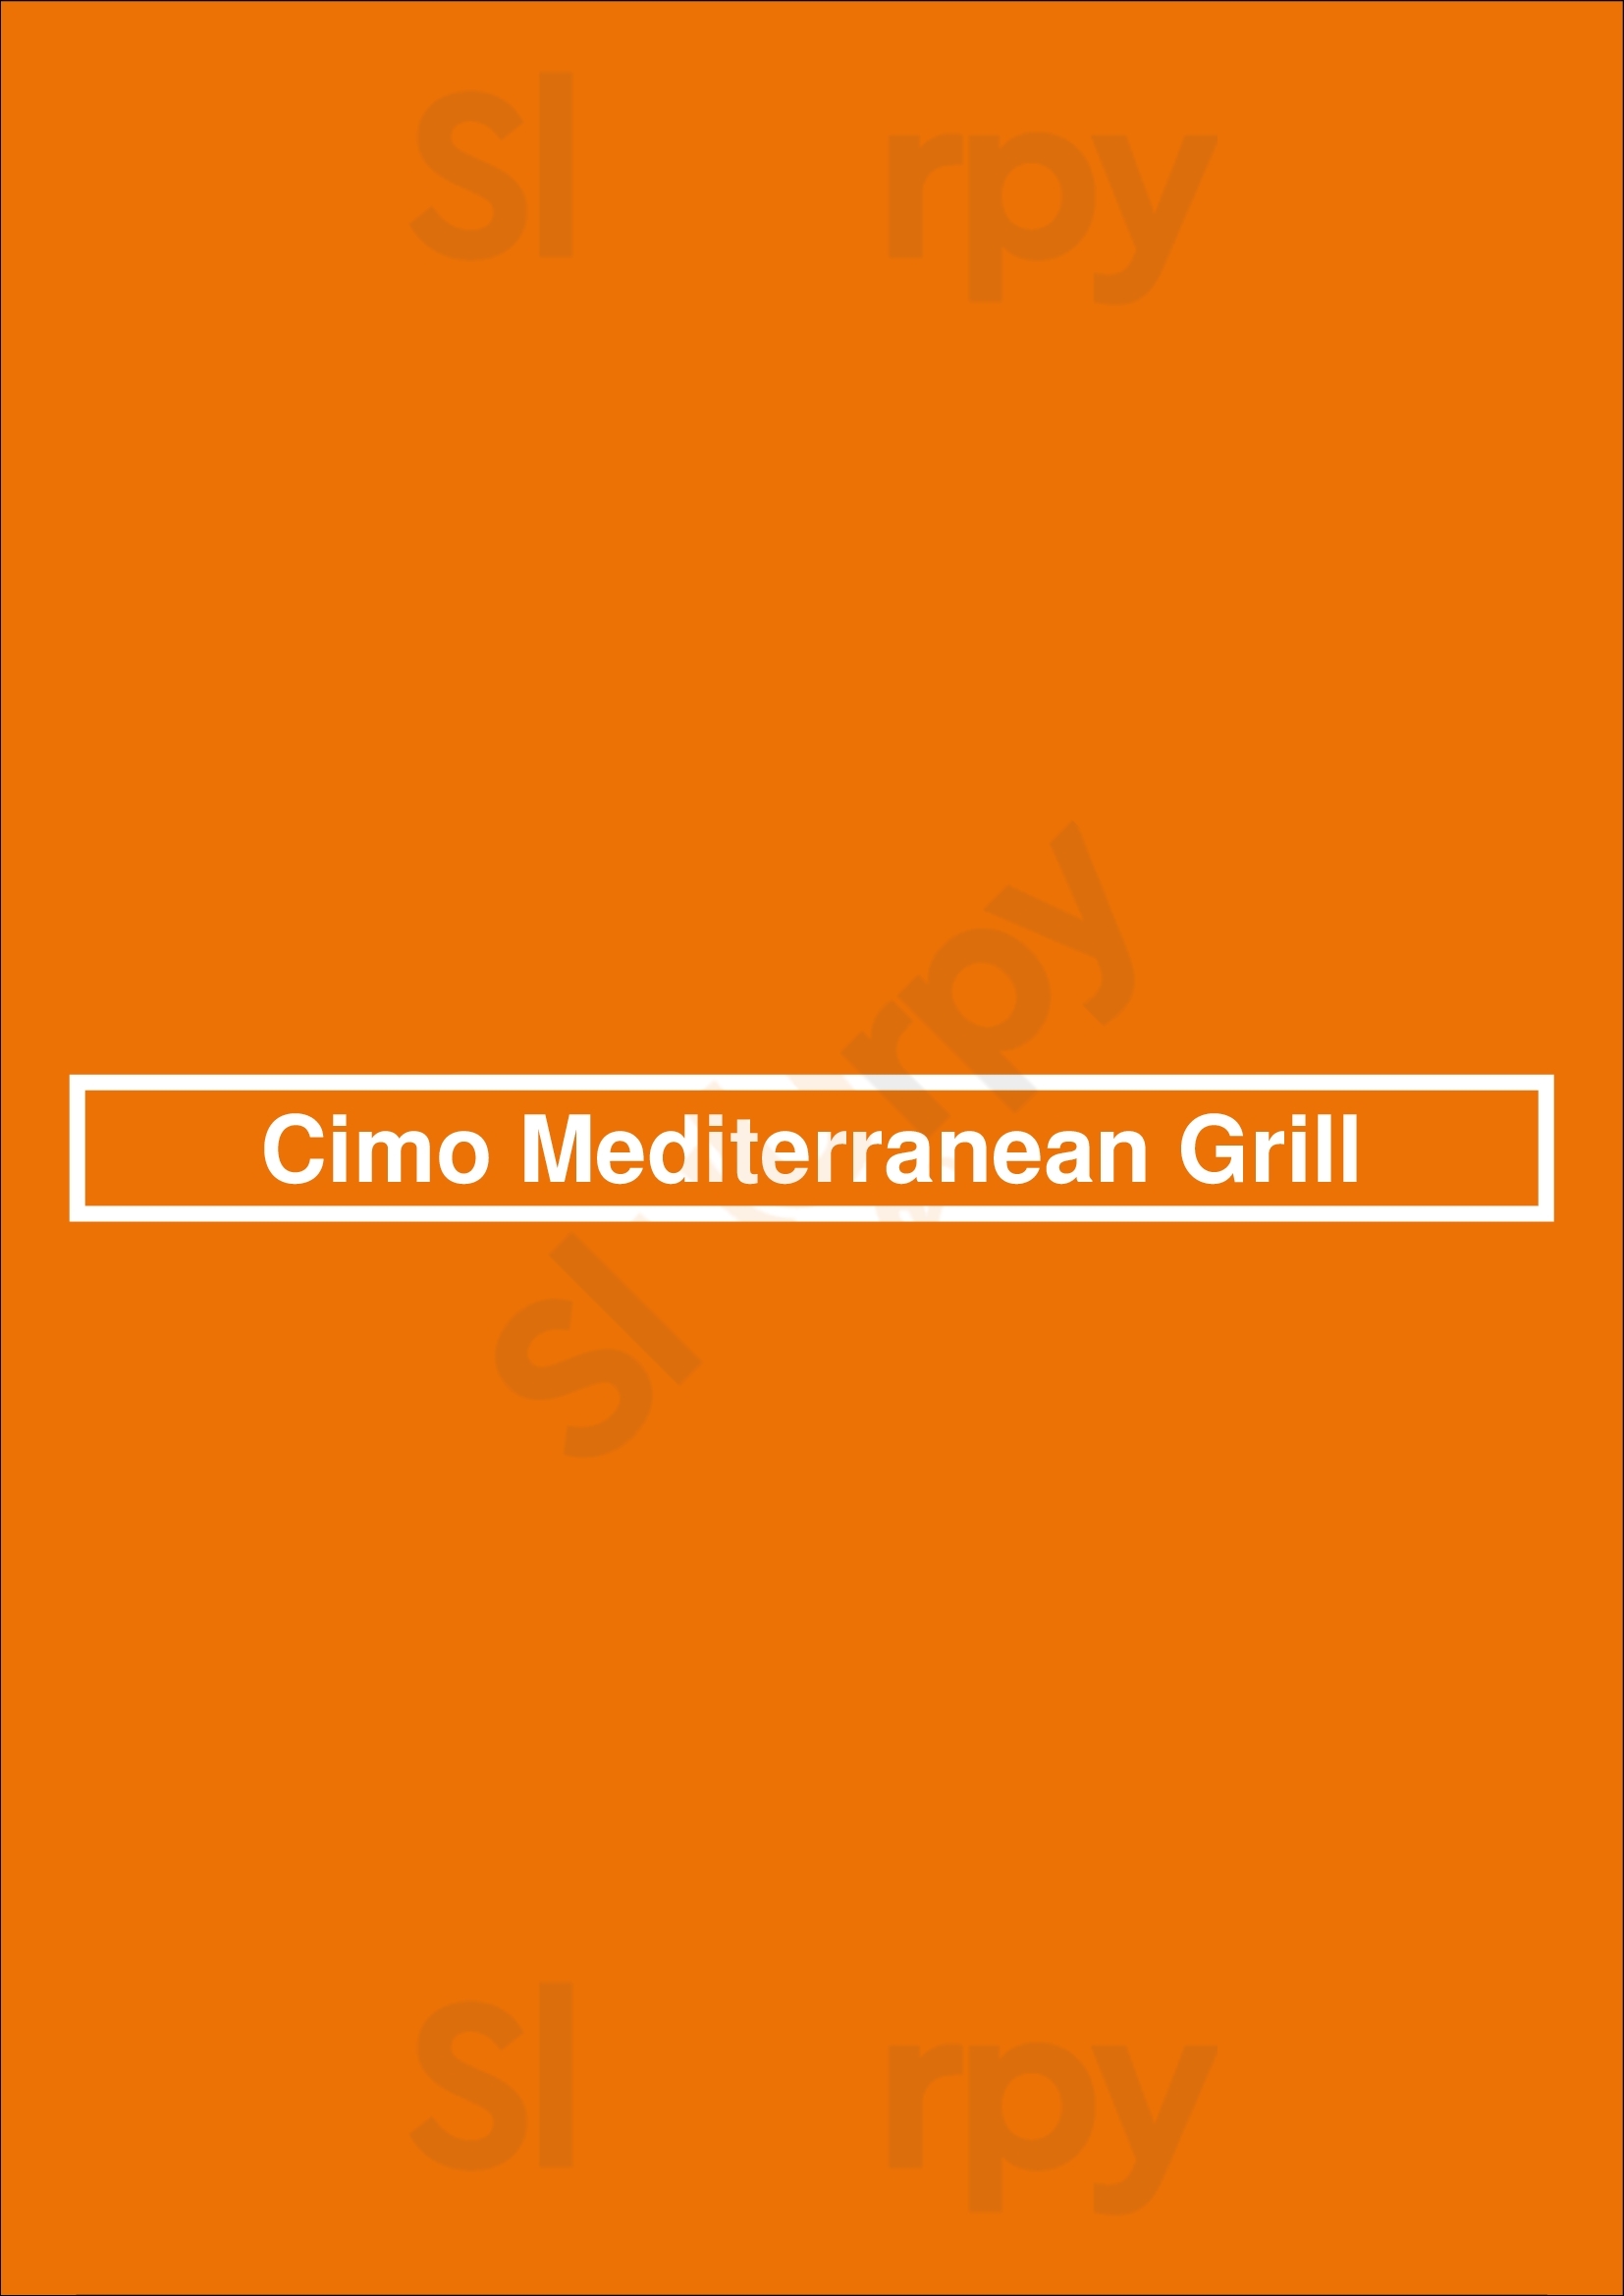 Cimo Mediterranean Grill Prince George Menu - 1